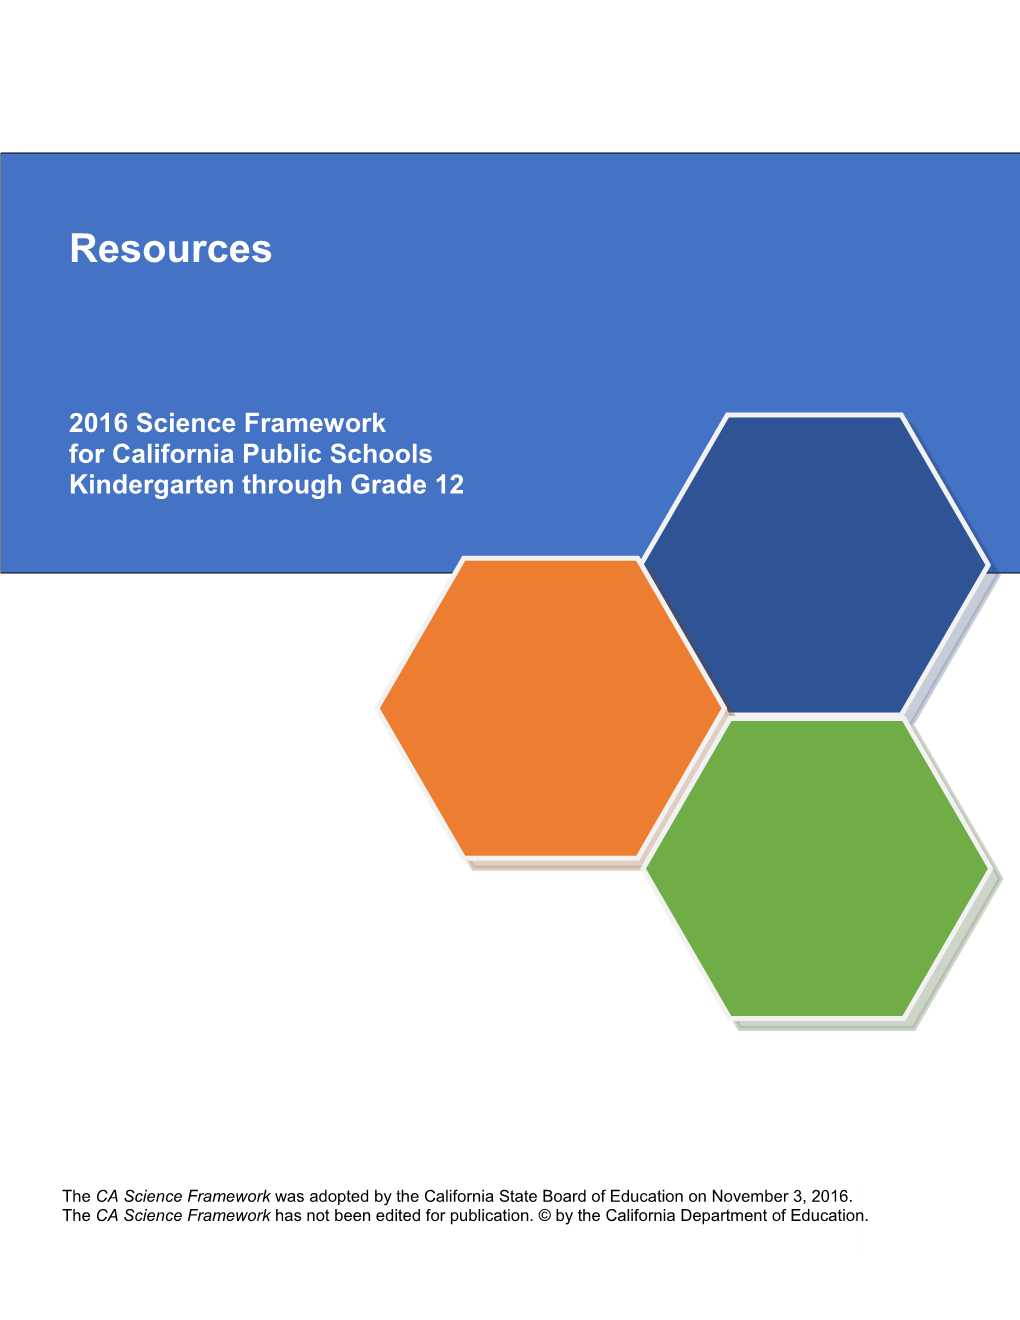 Science Framework, Resources - Curriculum Frameworks (CA Dept of Education)